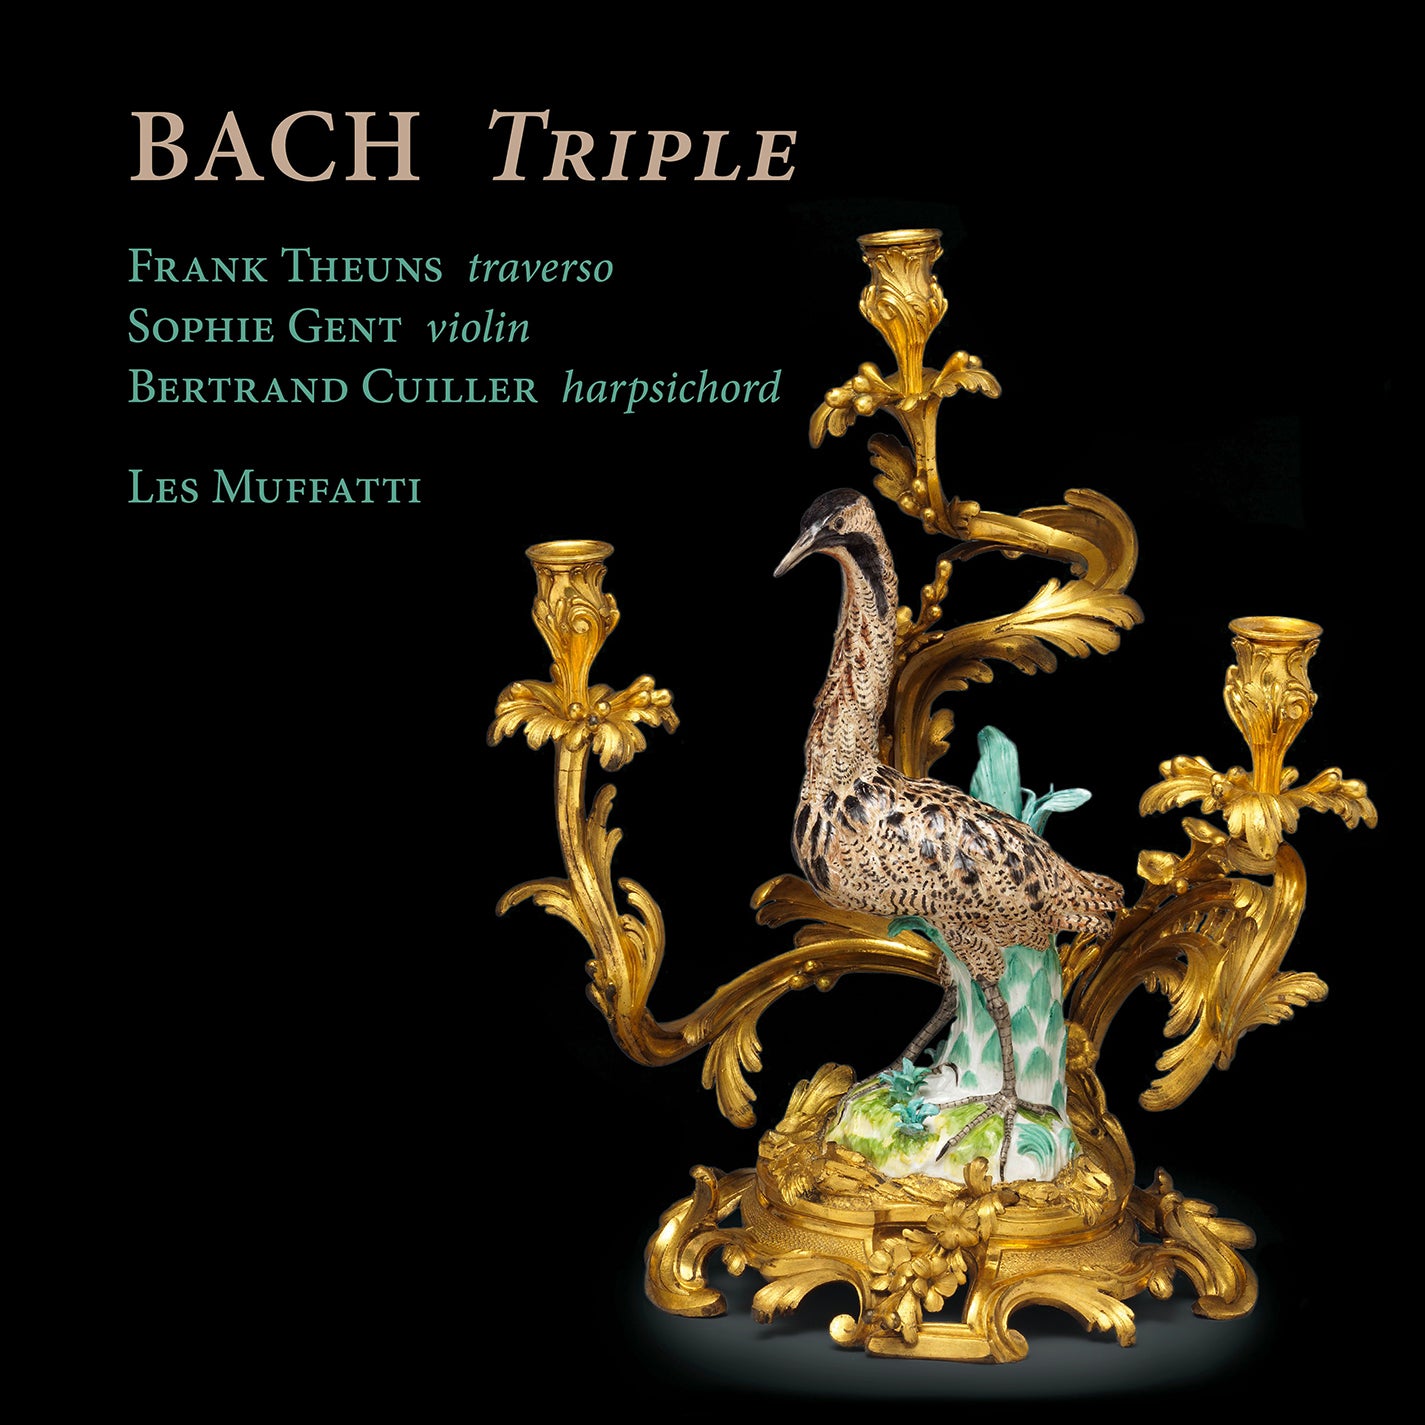 Bach: Triple - Concerti & Suites for Chamber Ensemble / Les Muffatti